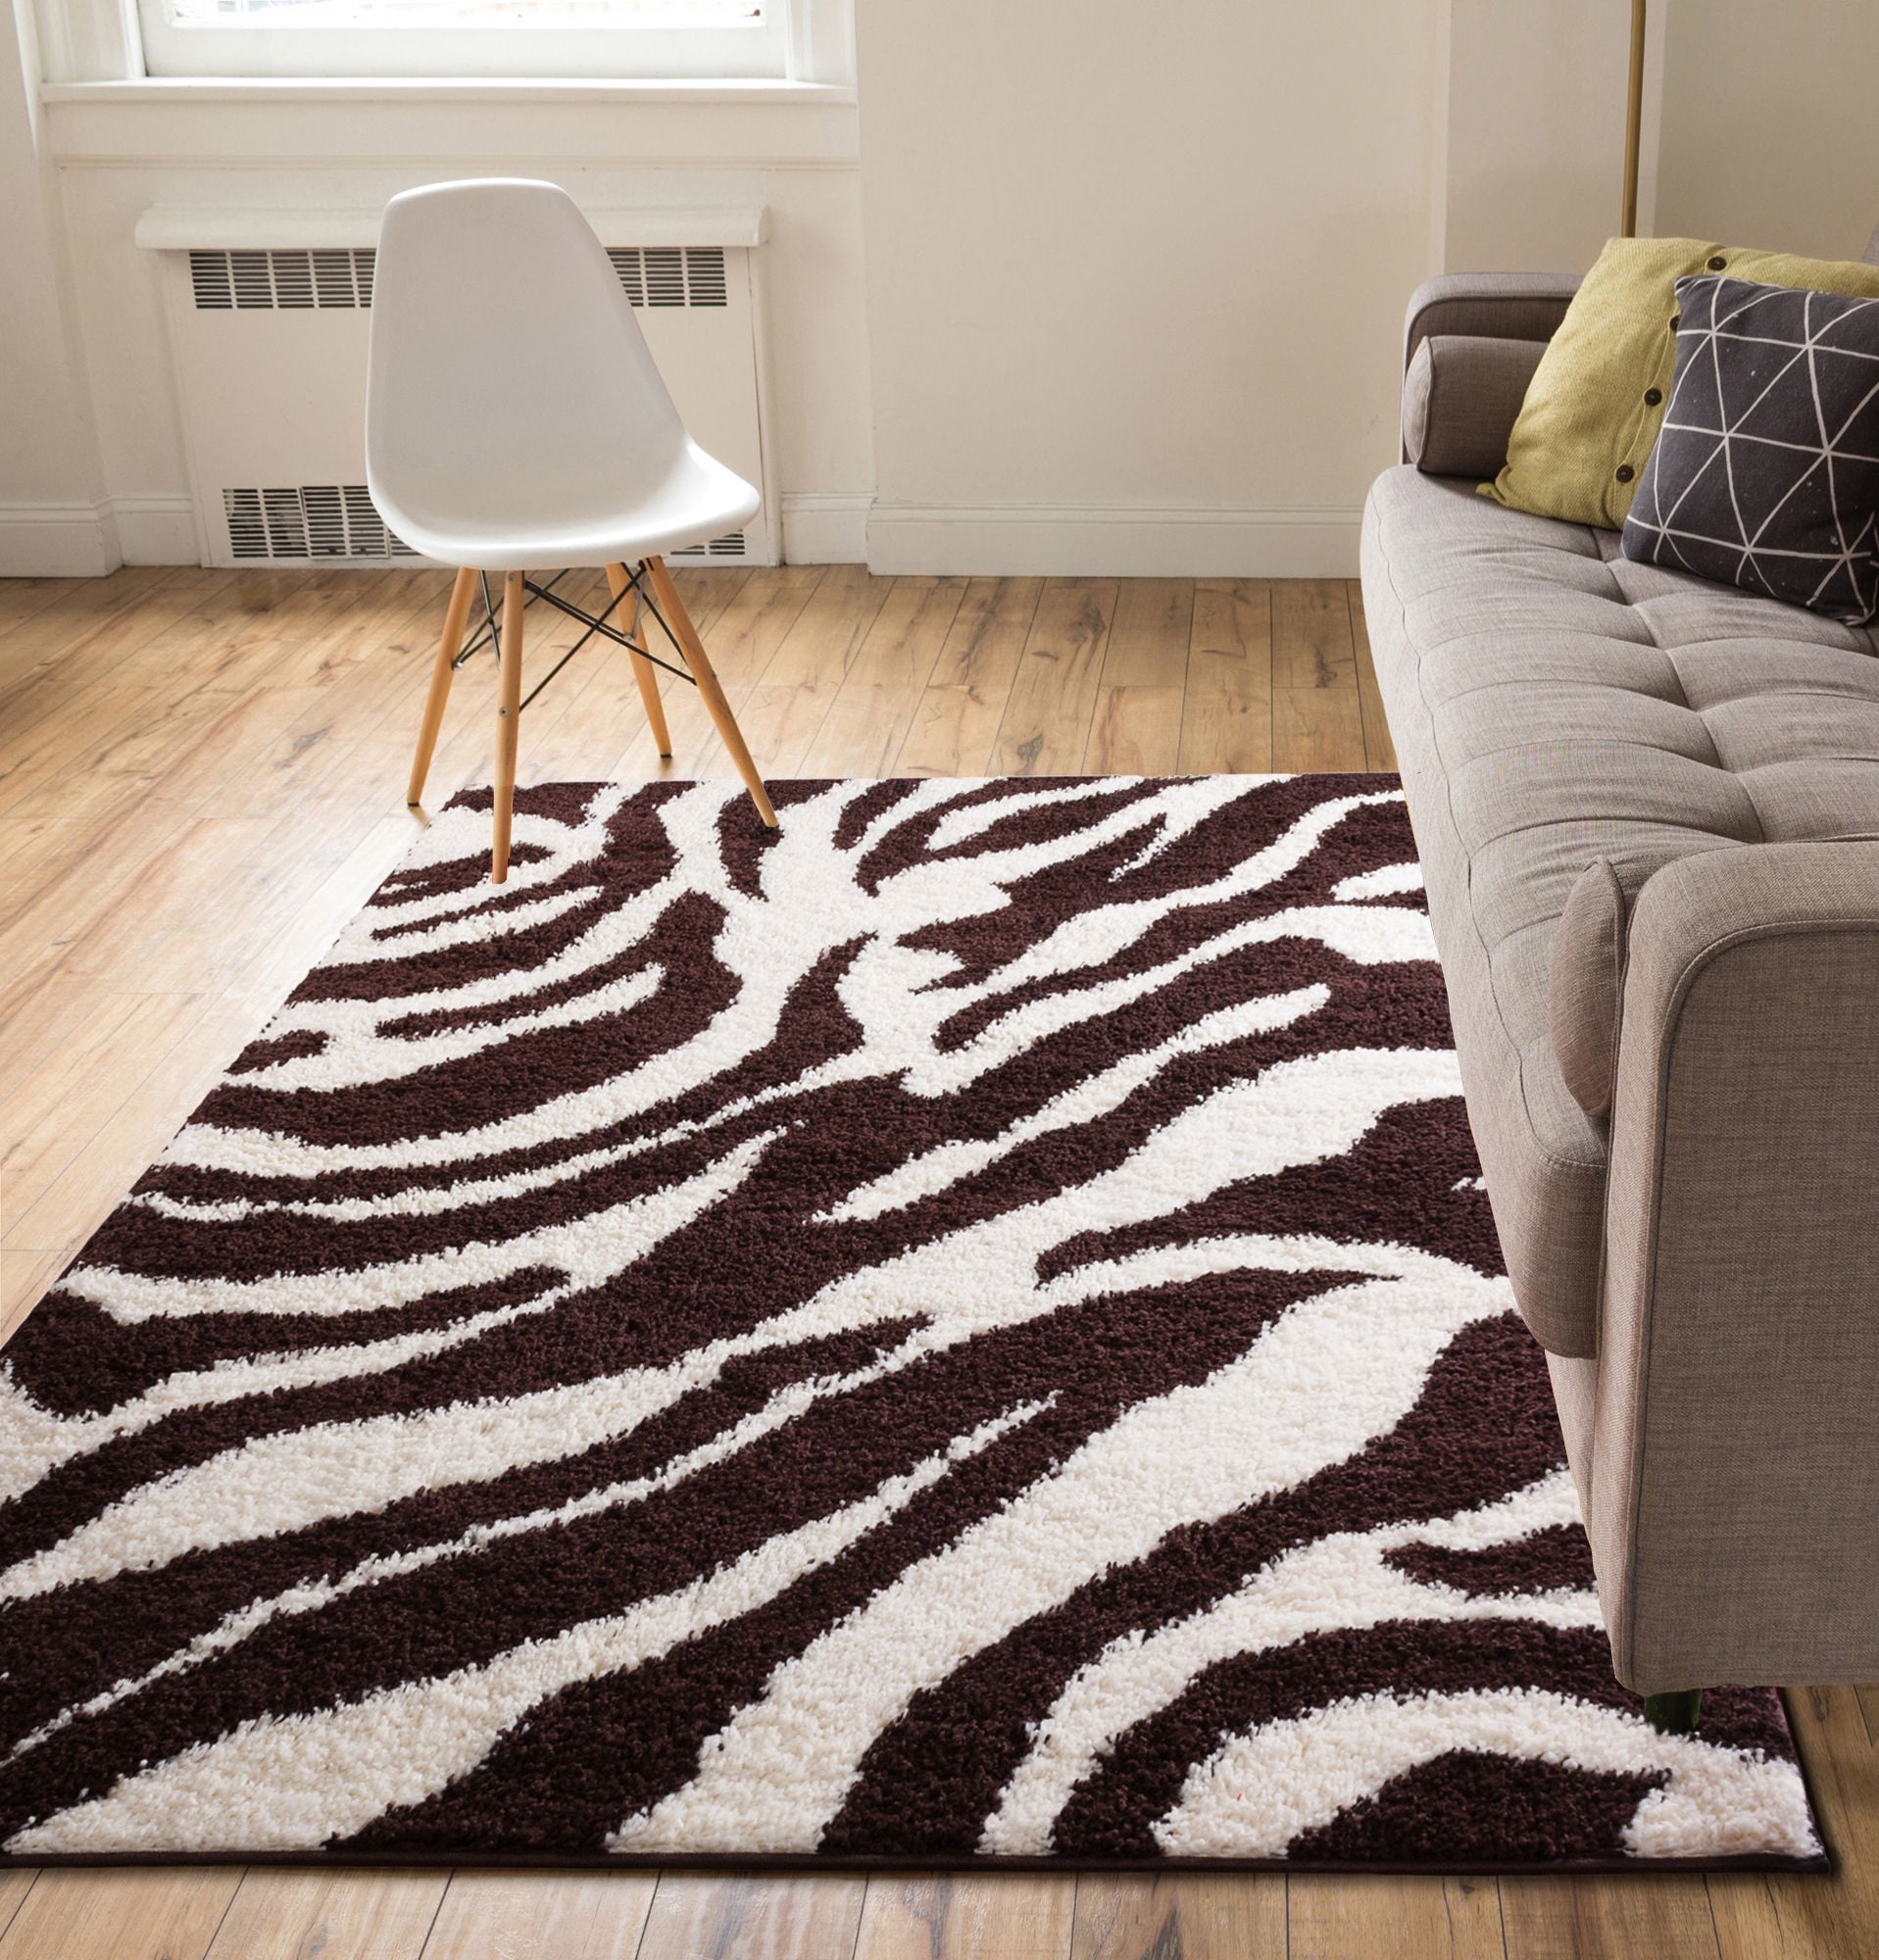 MoonTour Rainbow Animal Zebra Print Area Rugs for Living Room Non-Slip Washable Decor Mat Soft Floor Carpet Extra Large 4x5 Feet 